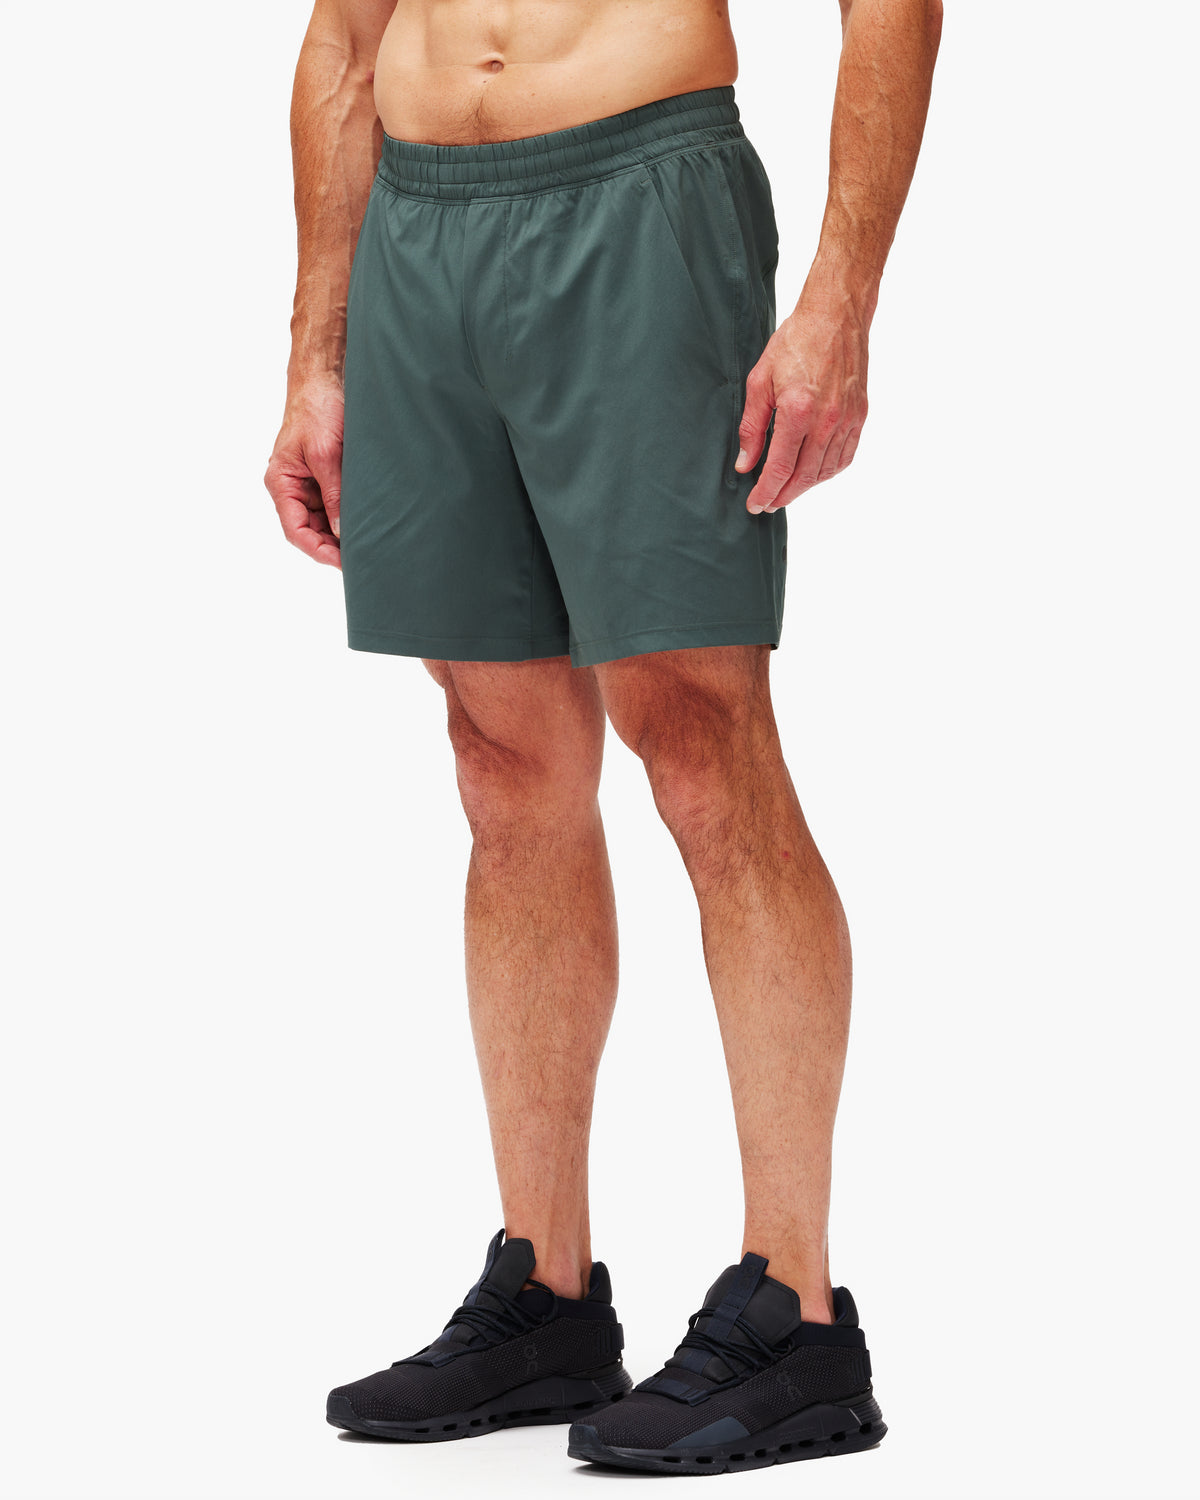 NWT LULULEMON WLDM Mint Green Pace Breaker Shorts 7 Lined Men's Large